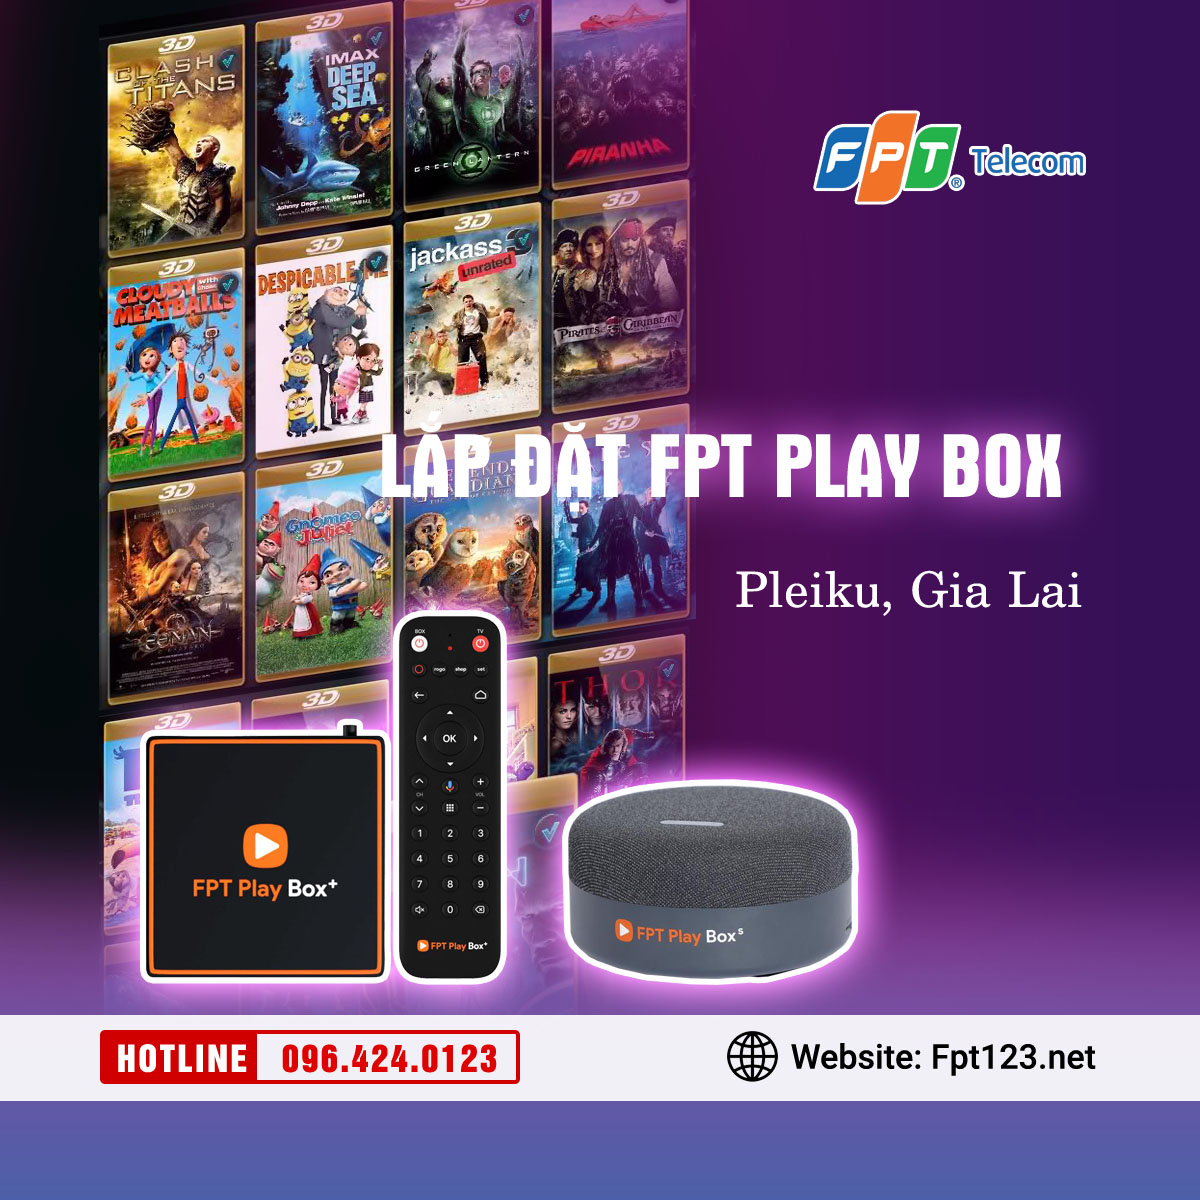 Lắp đặt FPT Play Box tại Pleiku, Gia Lai